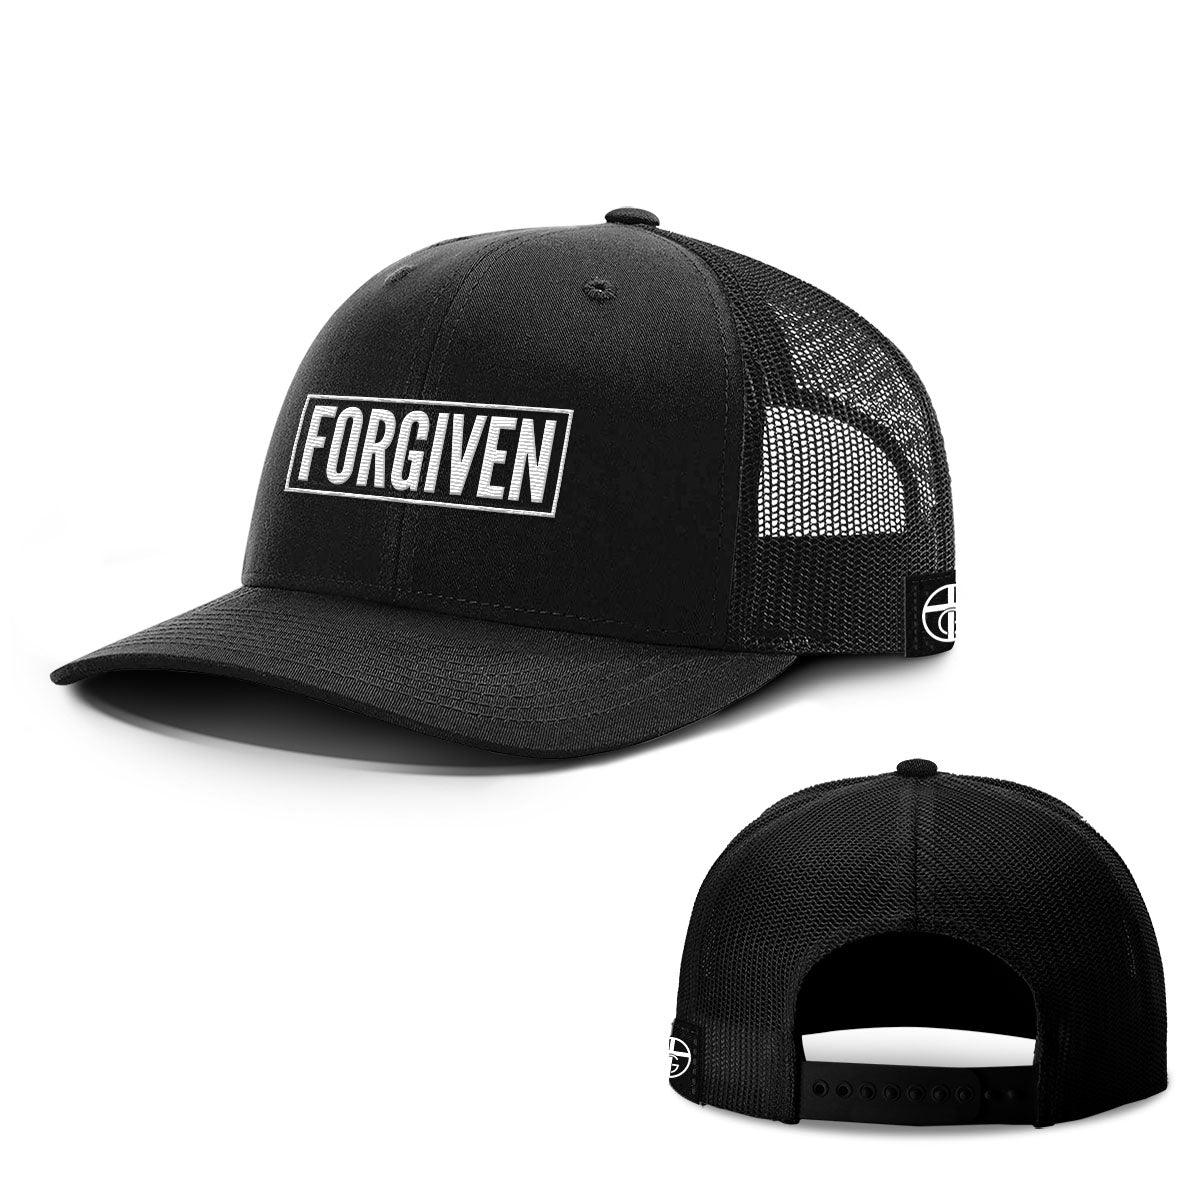 Forgiven Hats